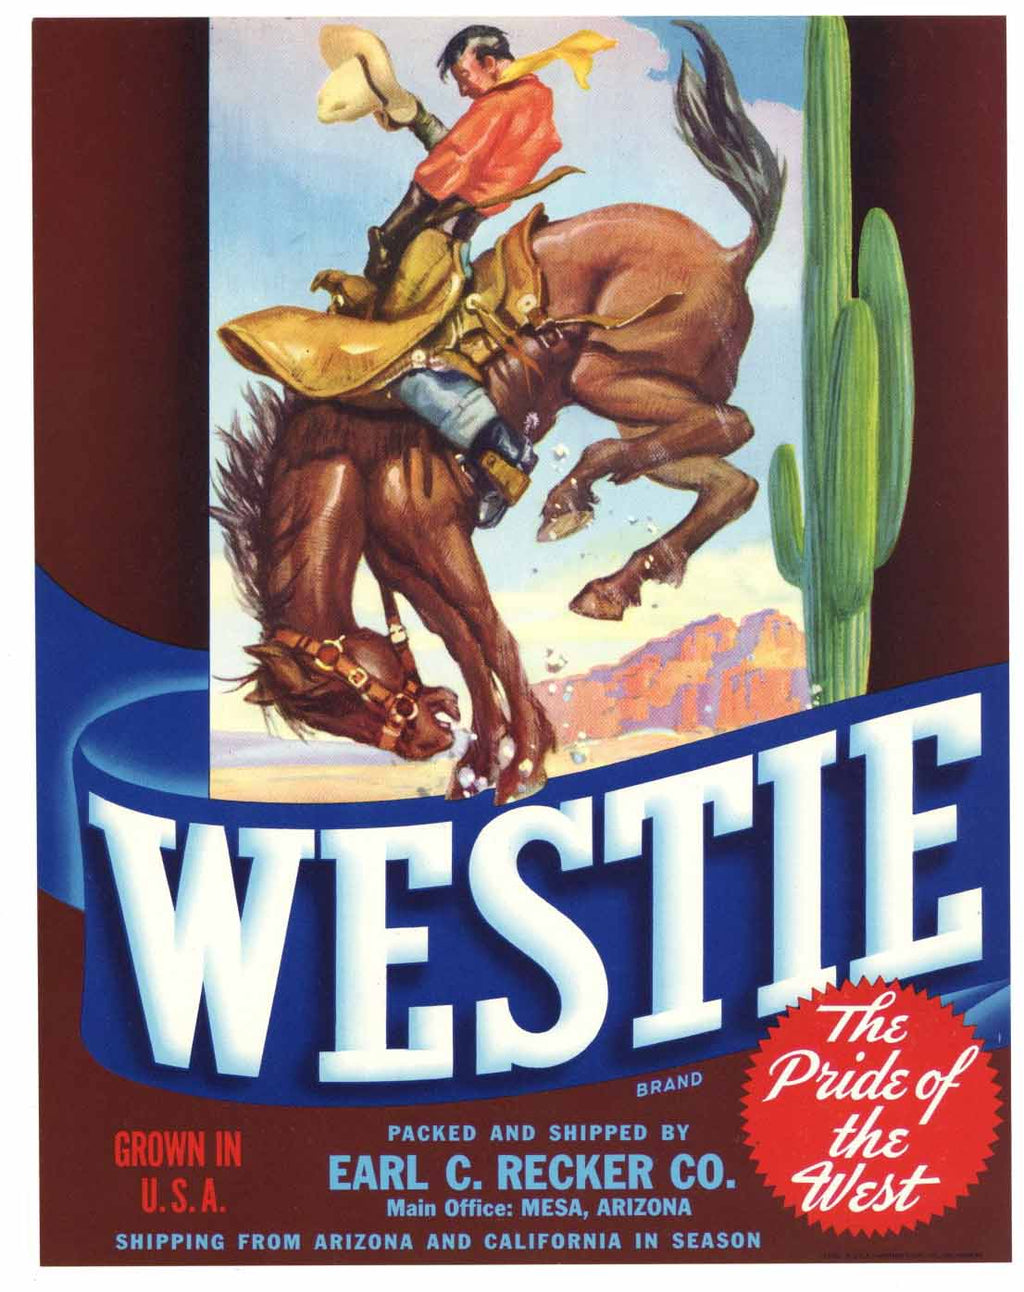 Westie Brand Vintage Arizona Vegetable Crate Label